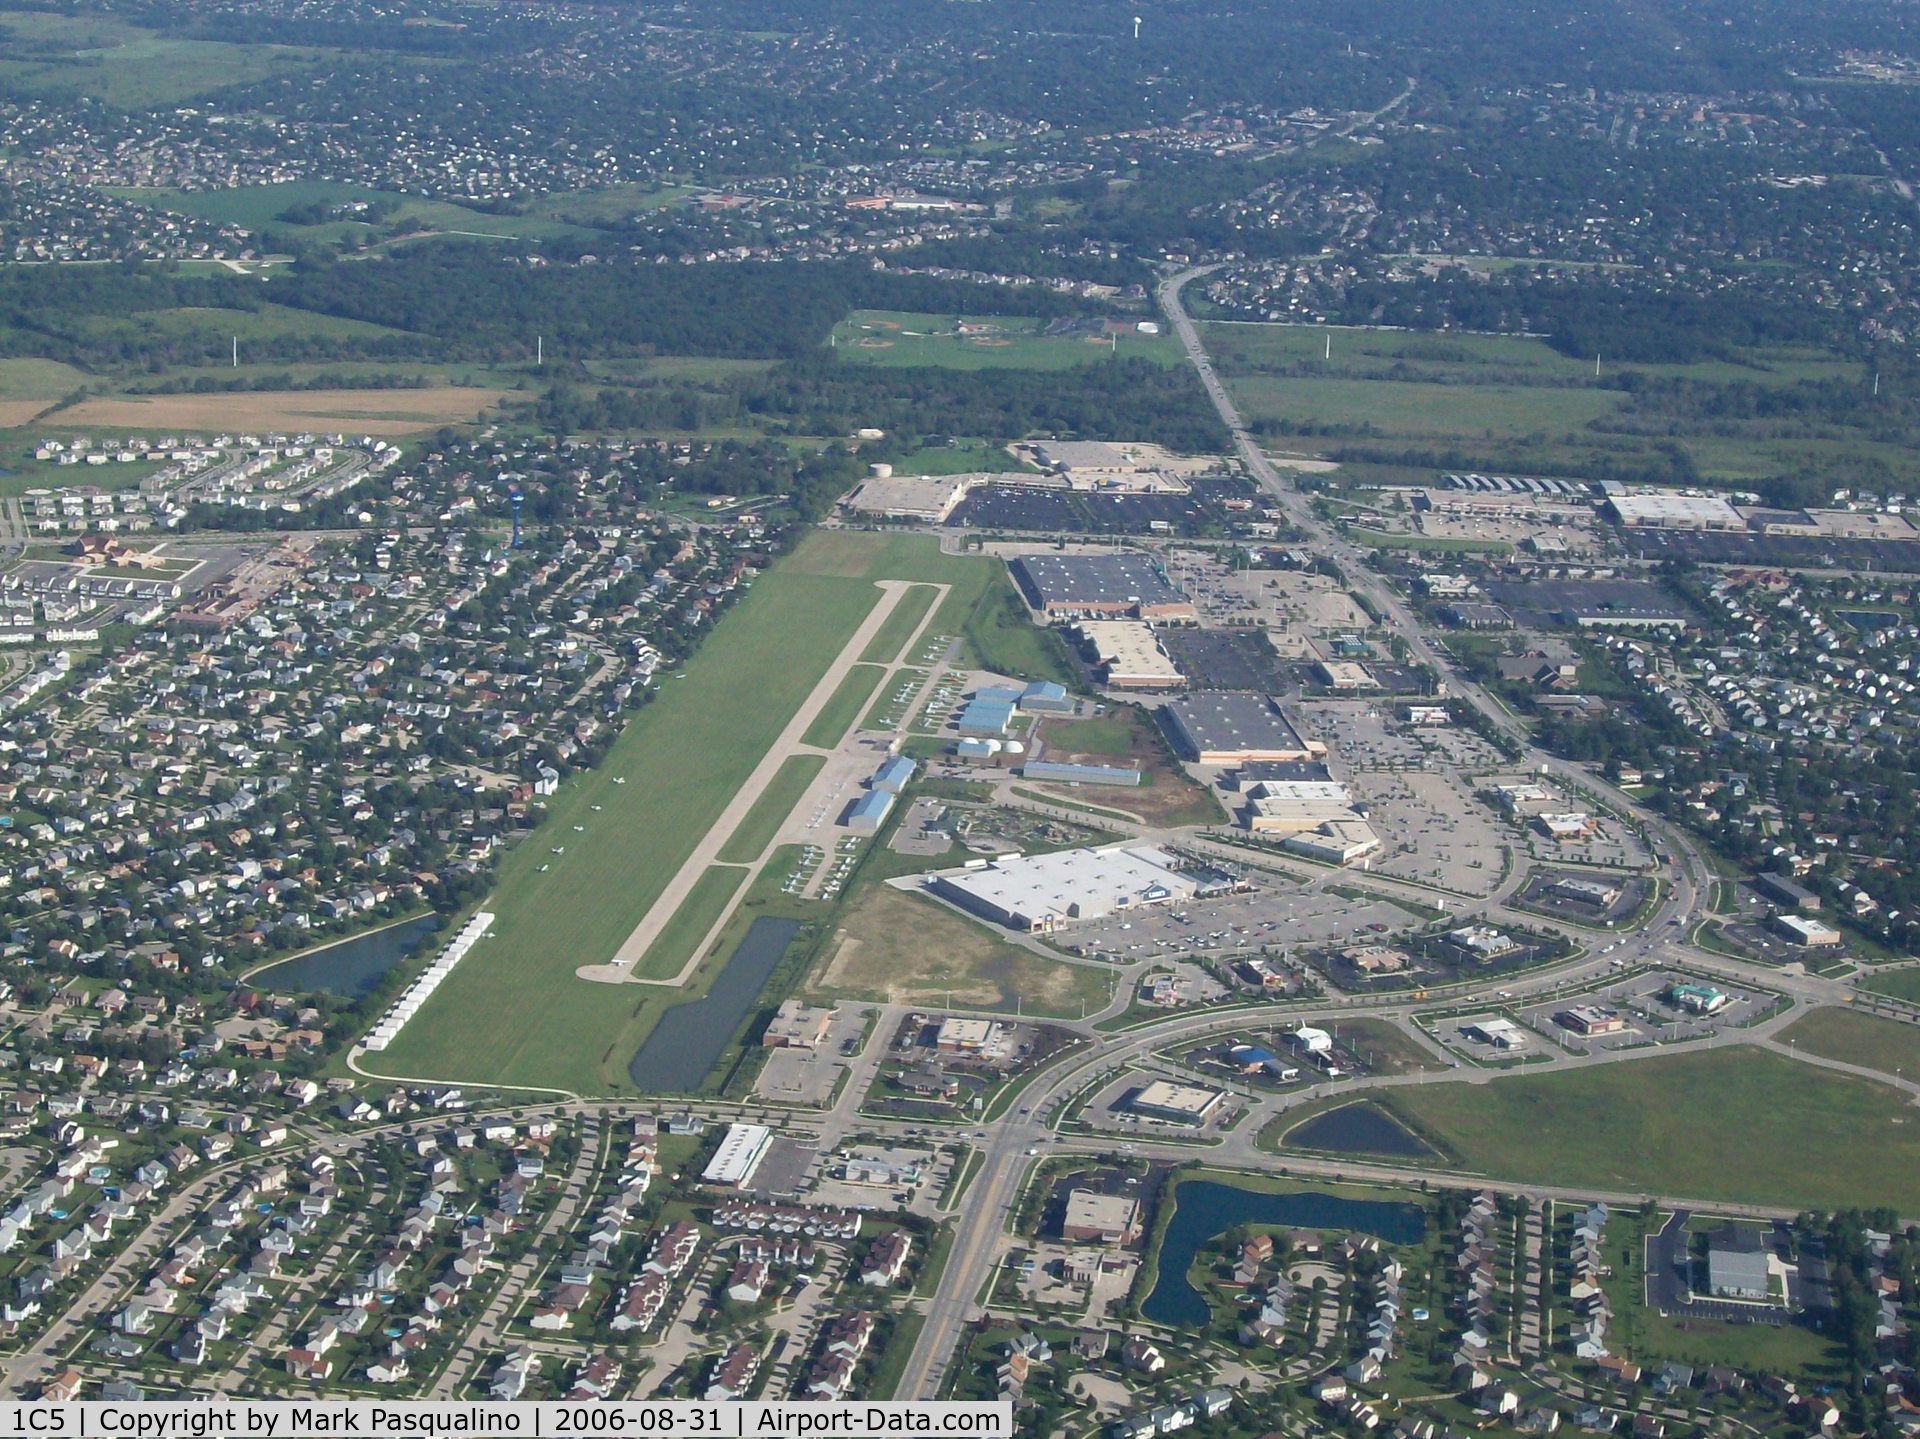 Bolingbrook's Clow International Airport (1C5) - Clow International